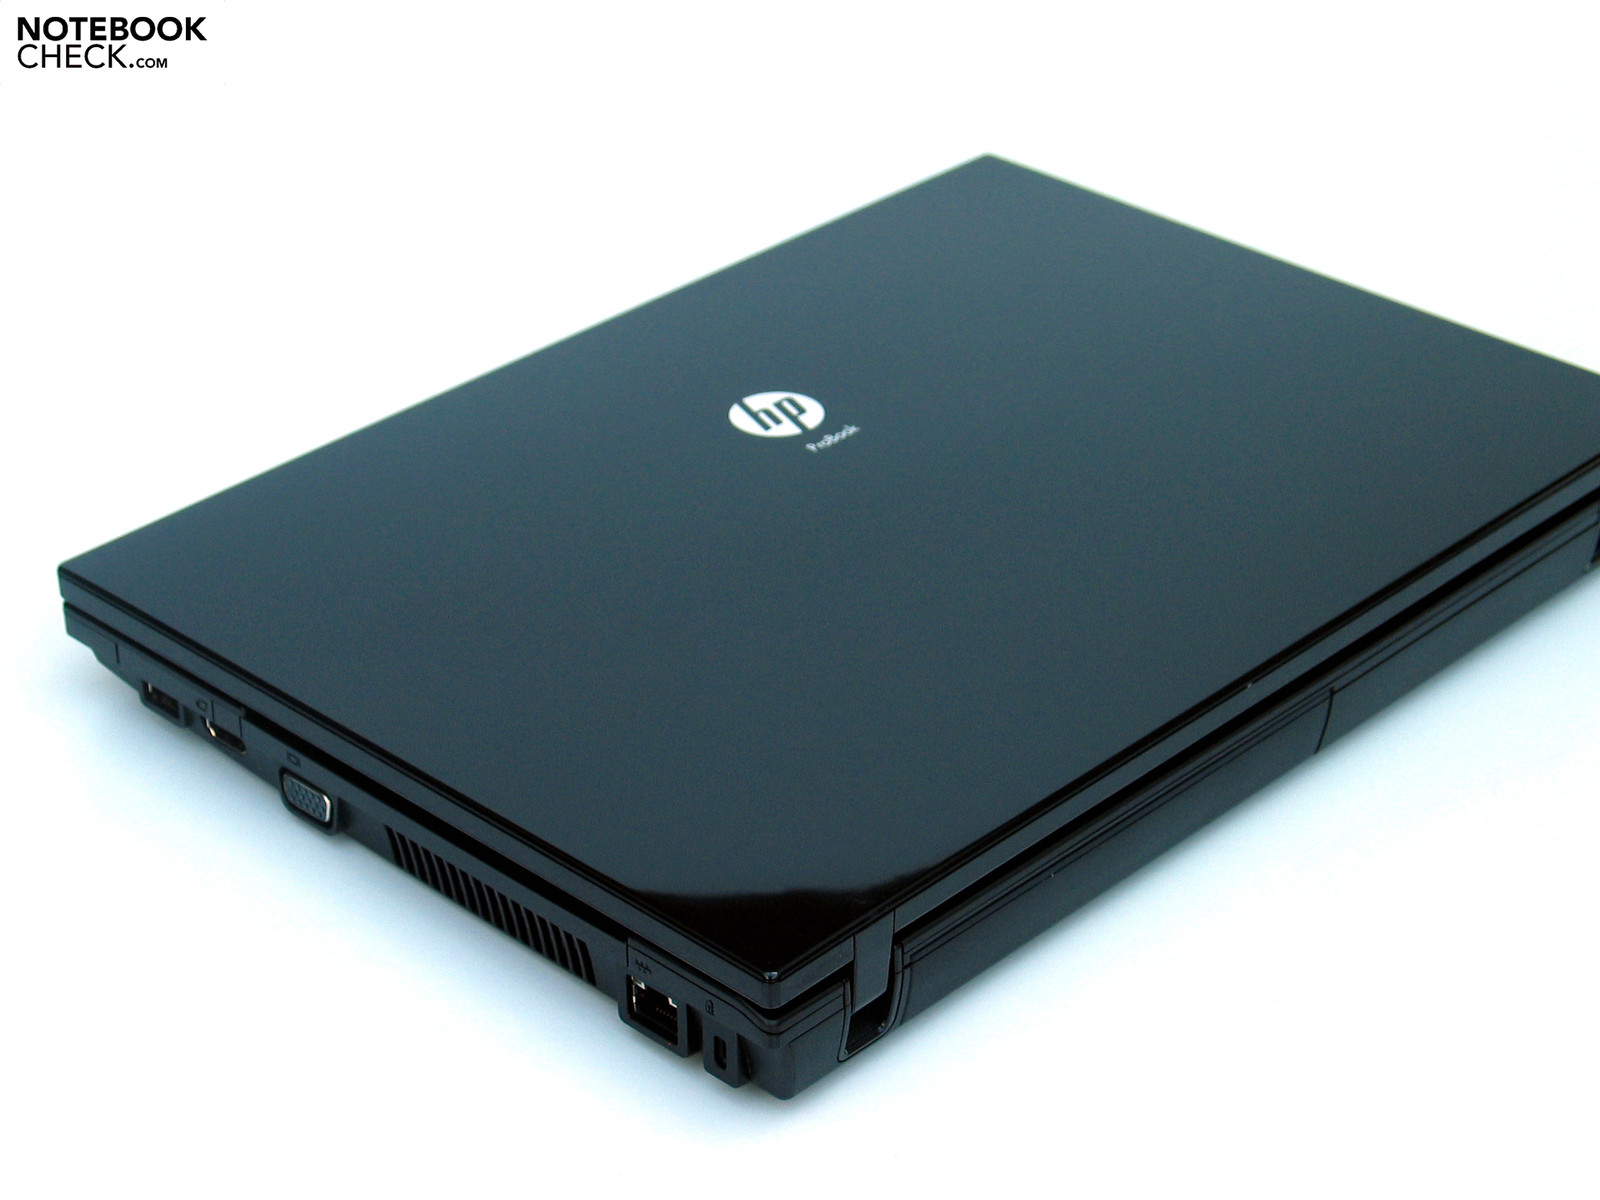 ProBook 4310s Notebook PC